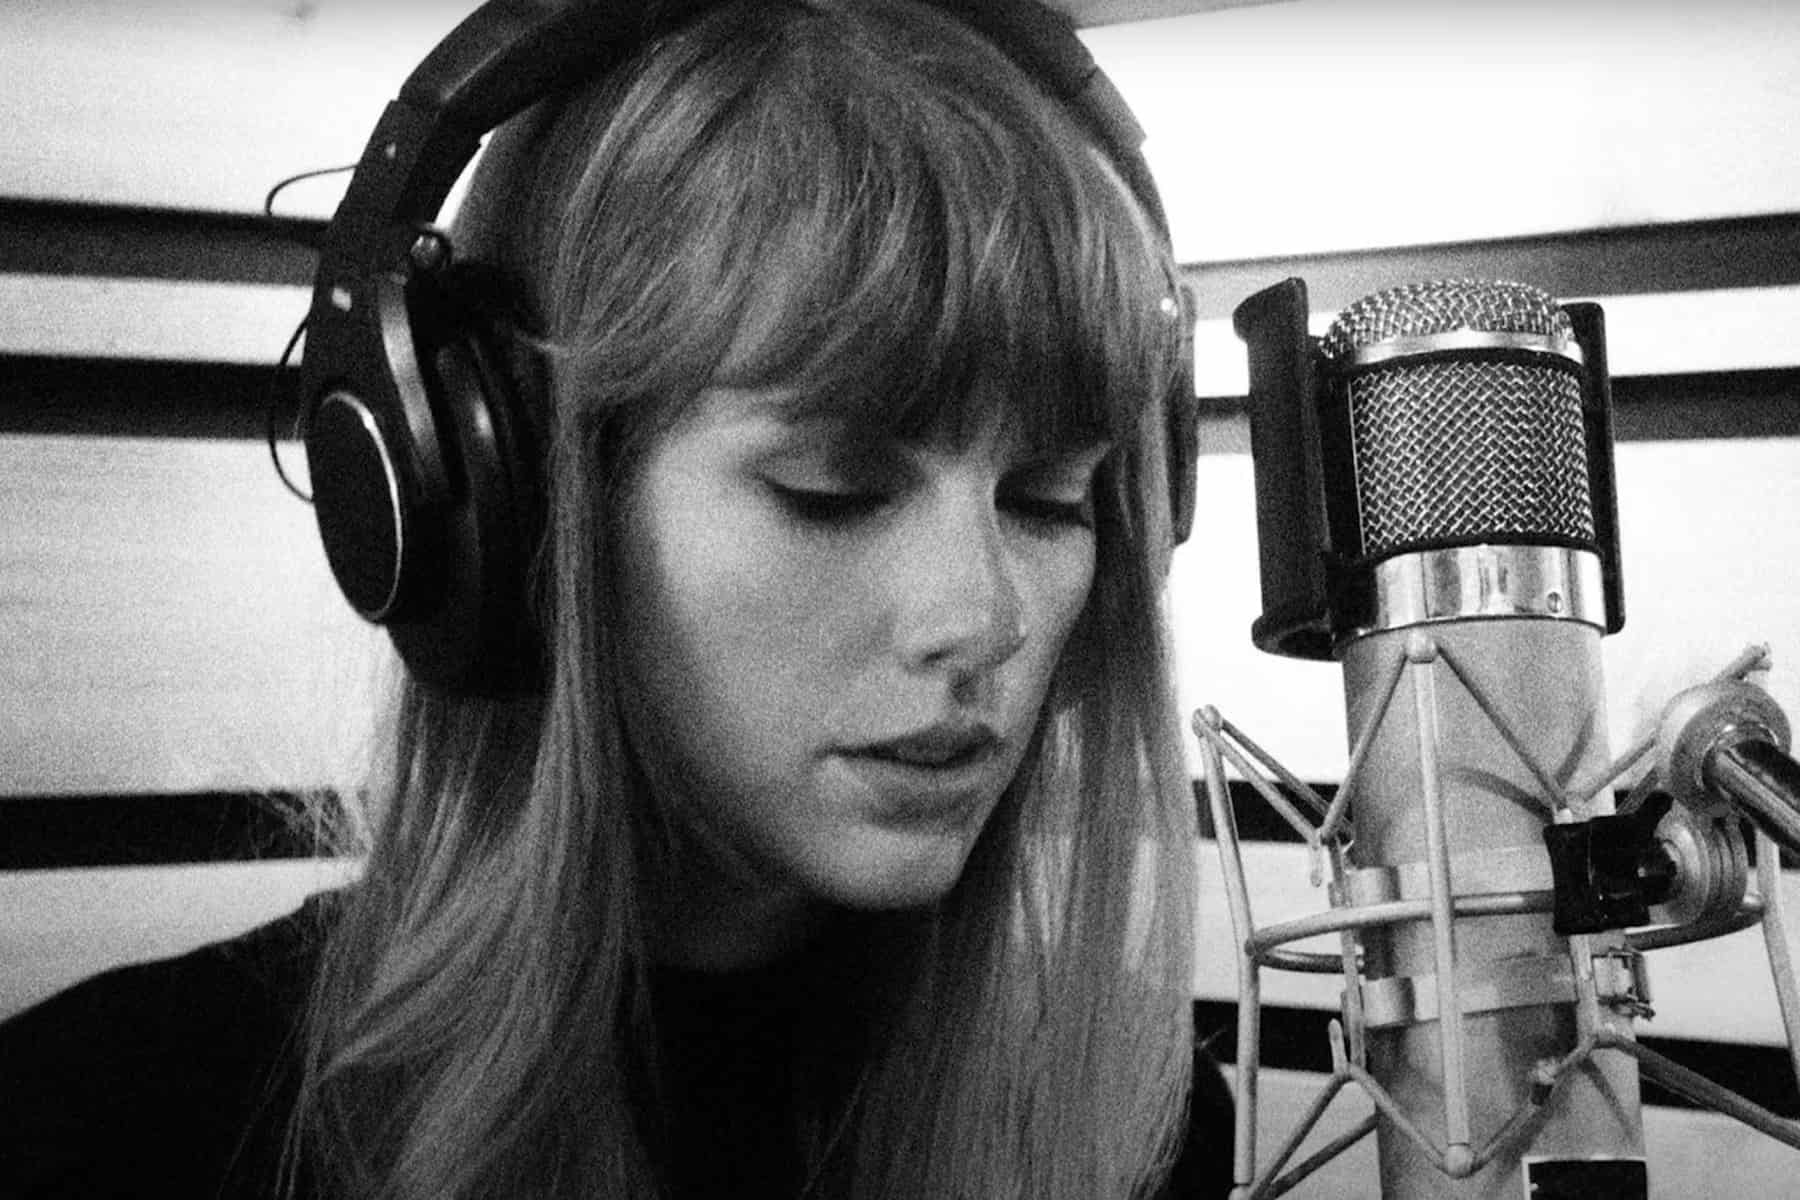 Taylor Swift Recording